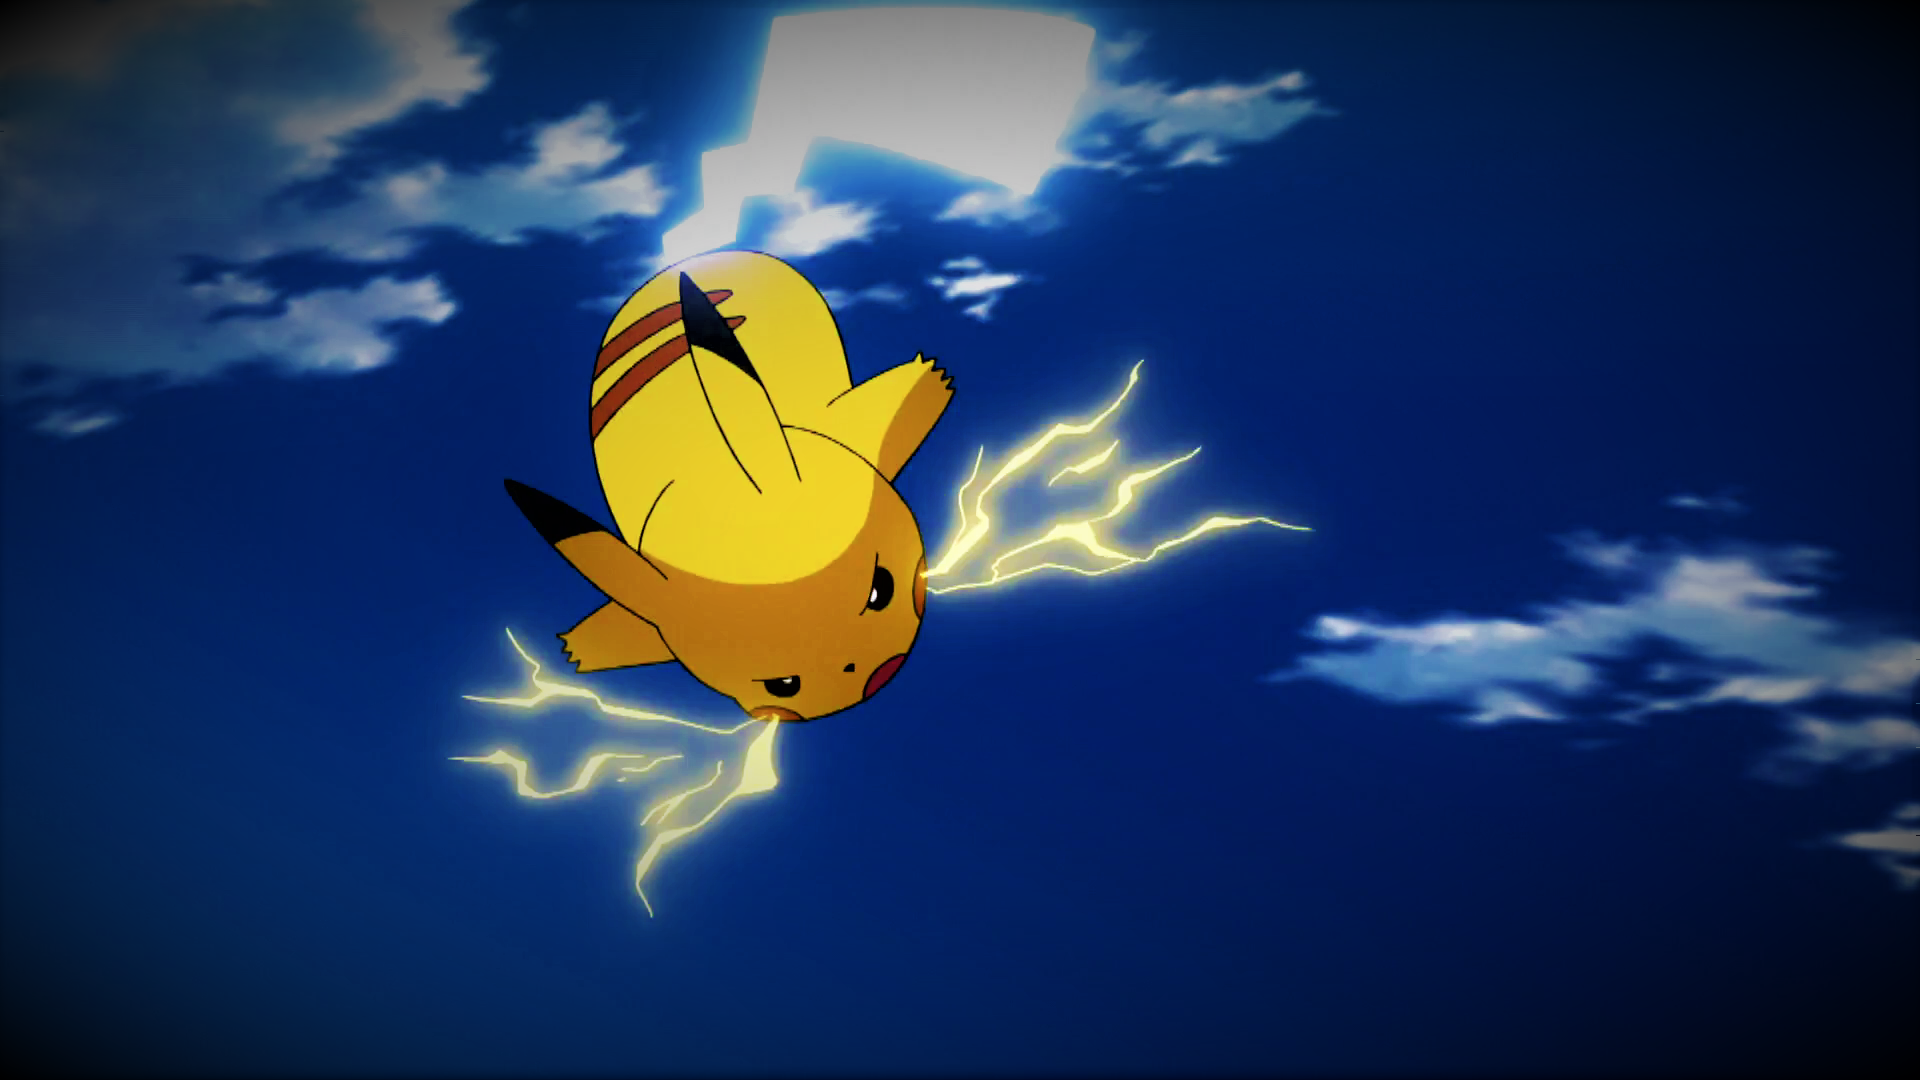 Pikachu's Iron Tail by Pokemonsketchartist on DeviantArt